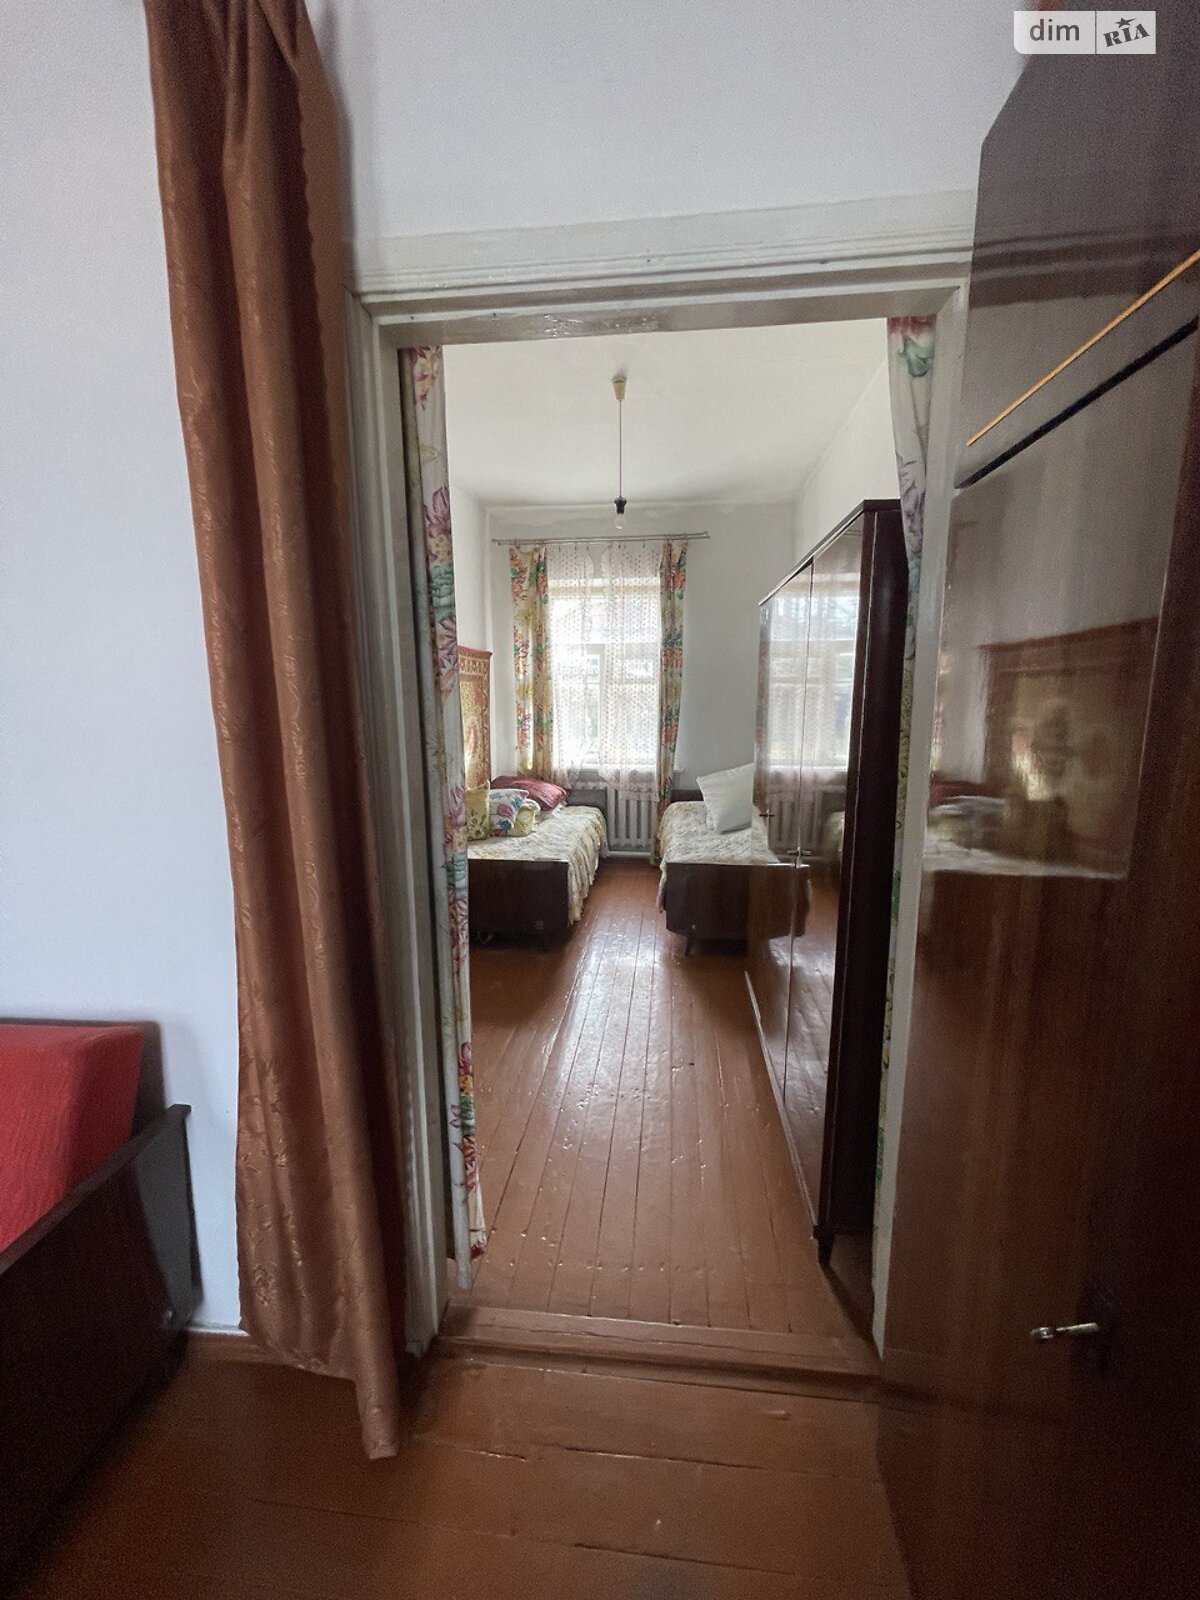 Продажа части дома в Виннице, переулок Ивана Богуна, район Пятничаны, 4 комнаты фото 1